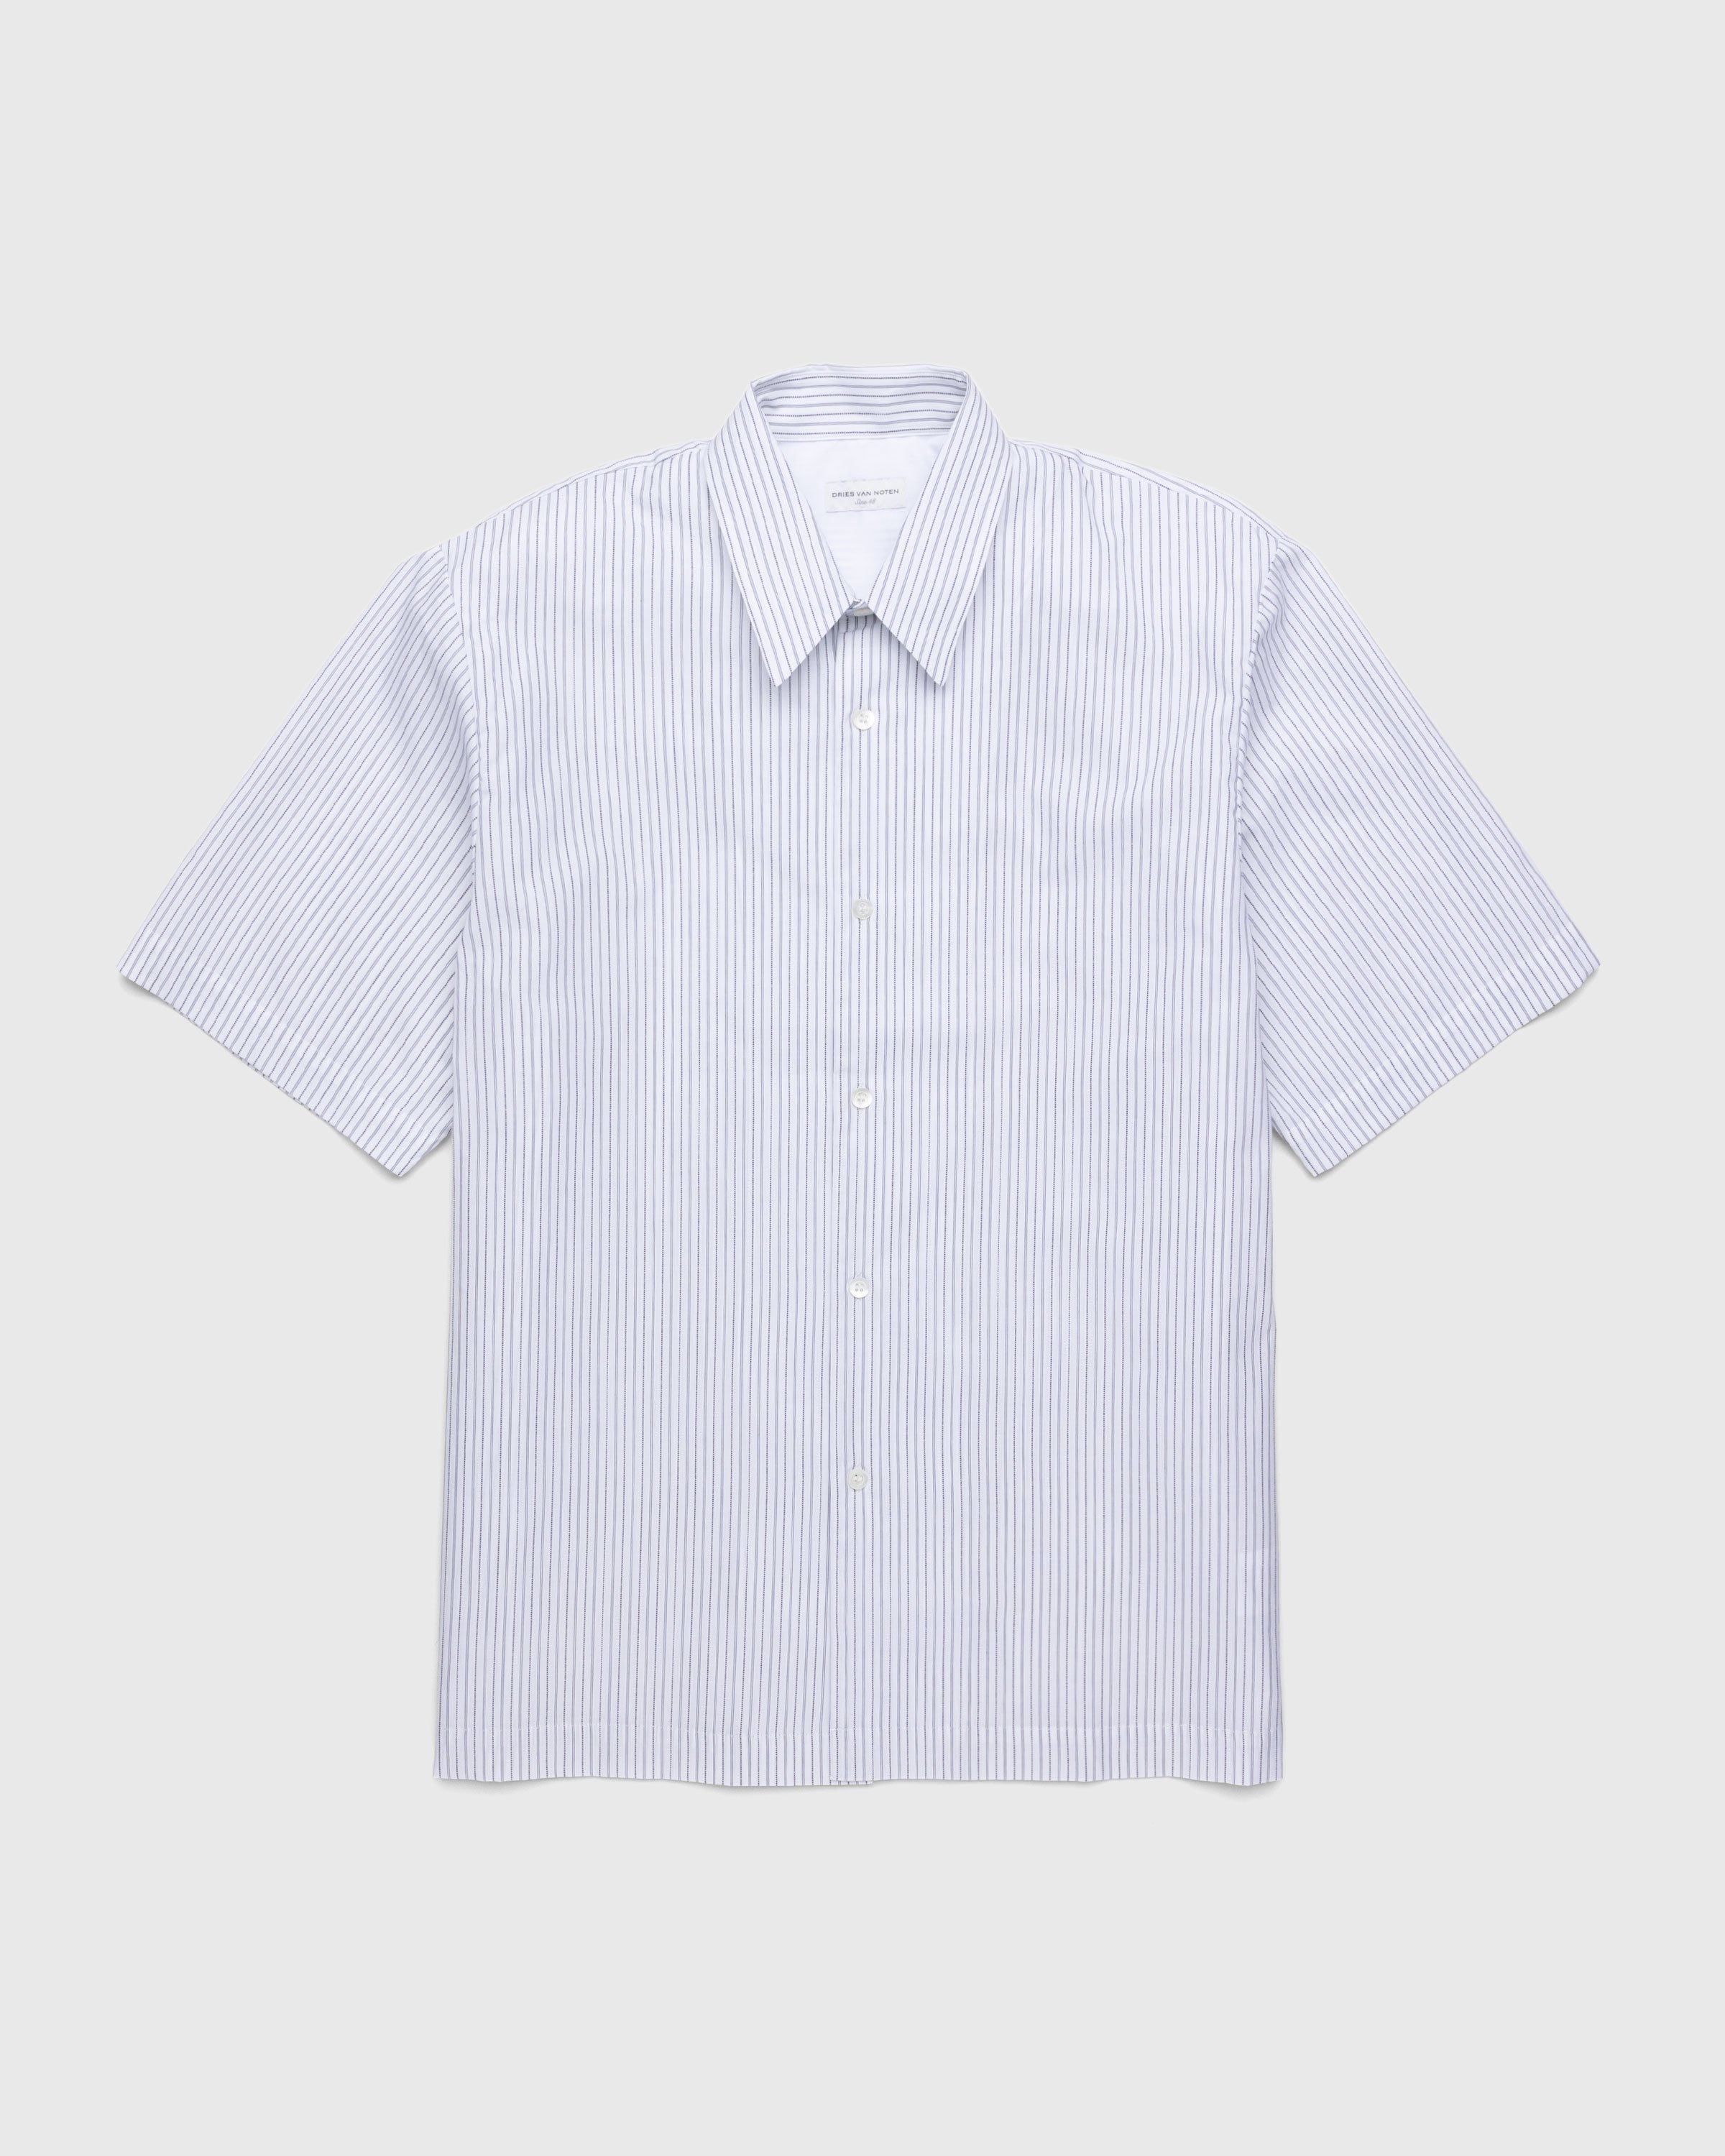 Dries van Noten - Clasen Shirt White - Clothing - White - Image 1